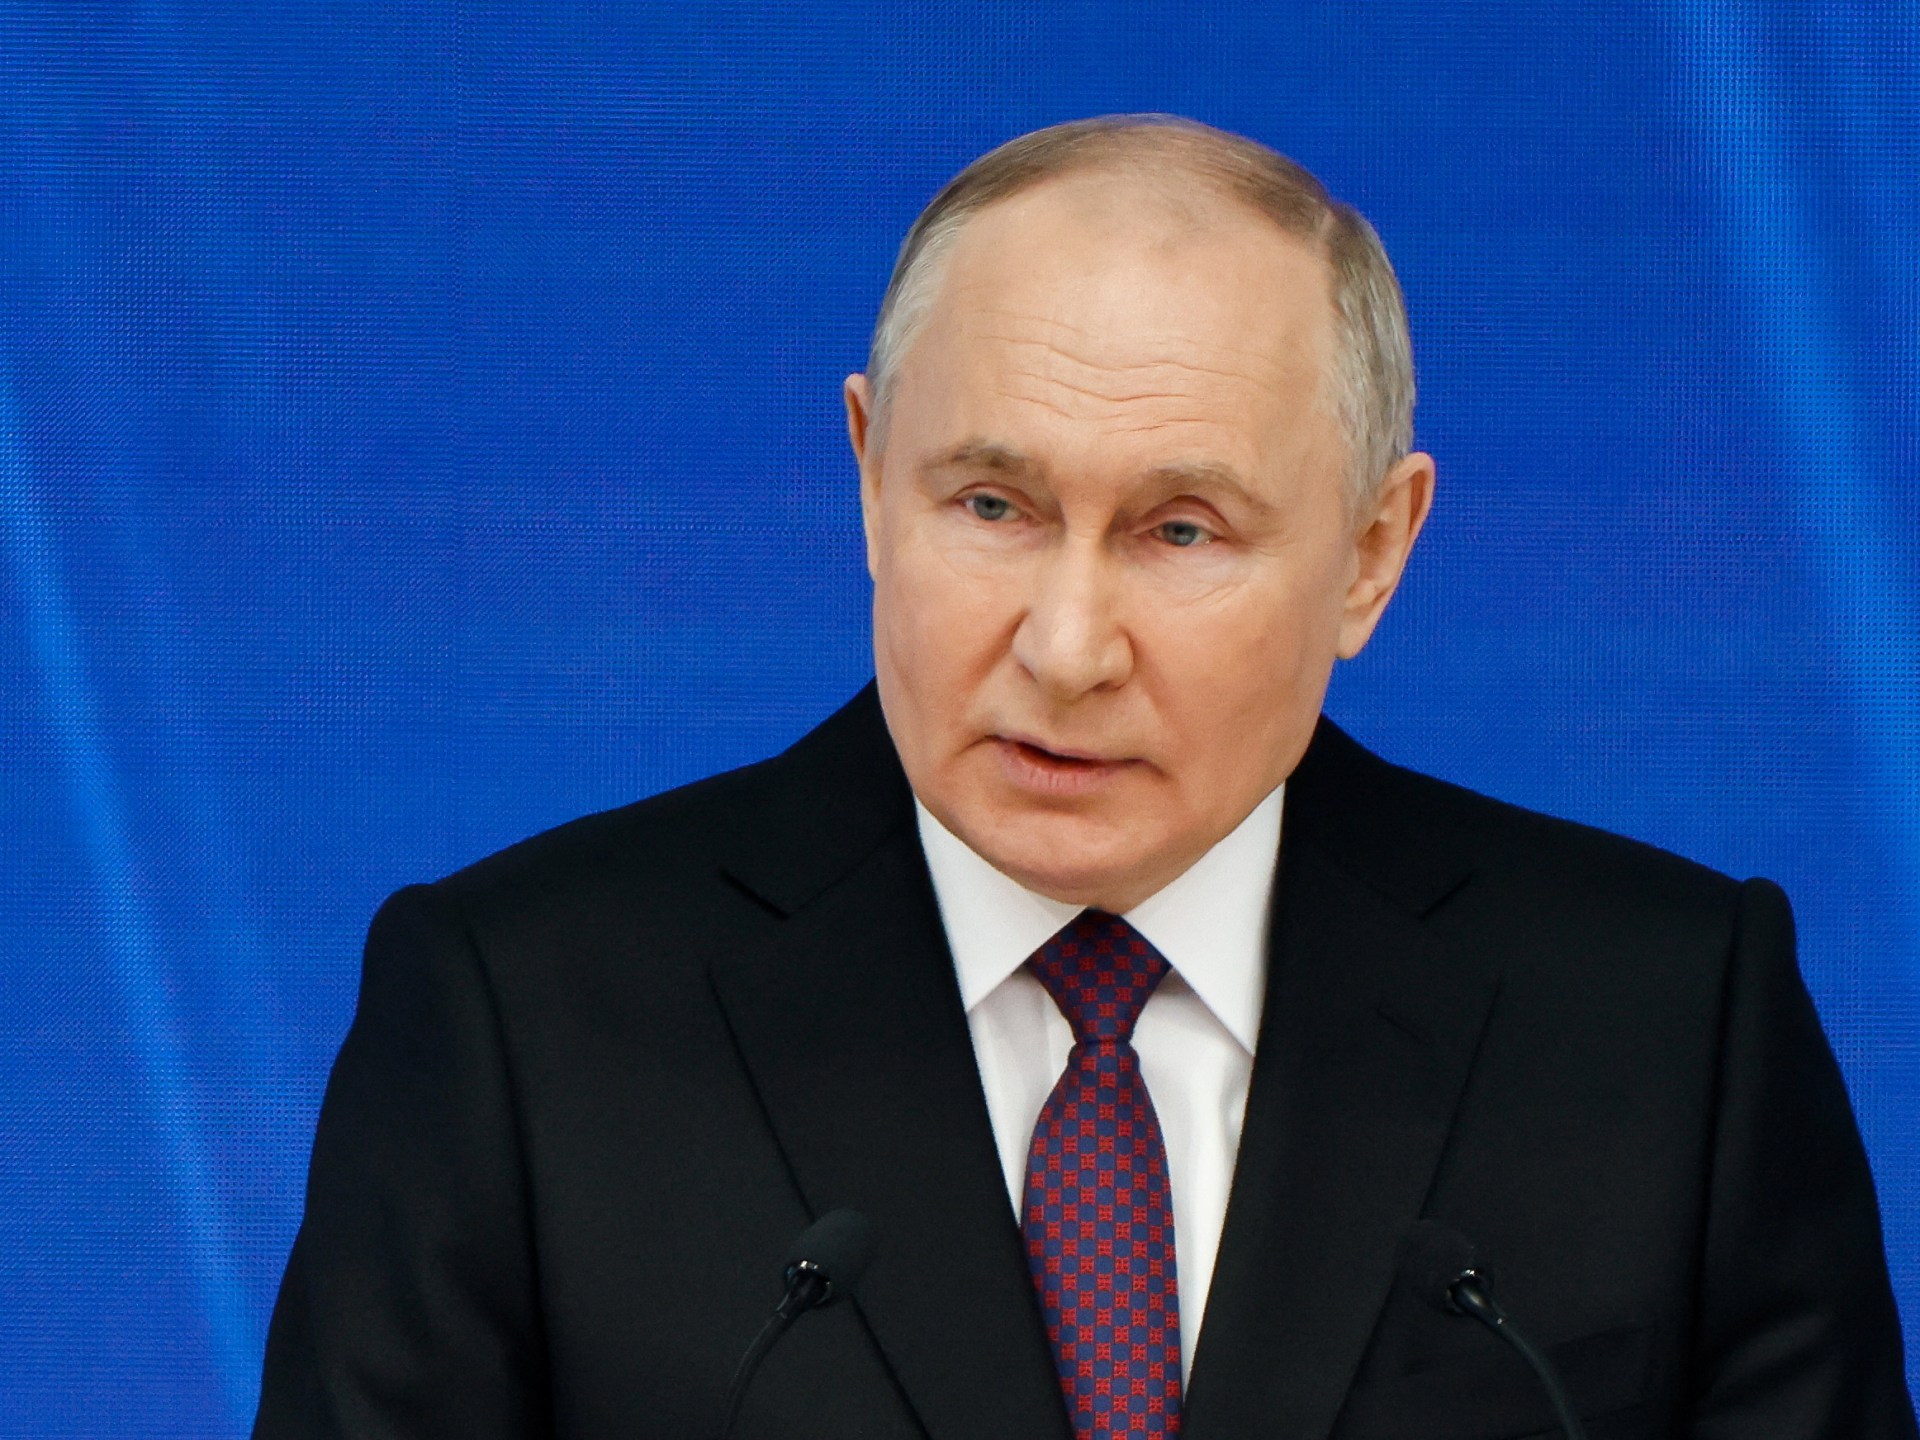 Putin warns risk of nuclear war if West sends troops to Ukraine | Politics News